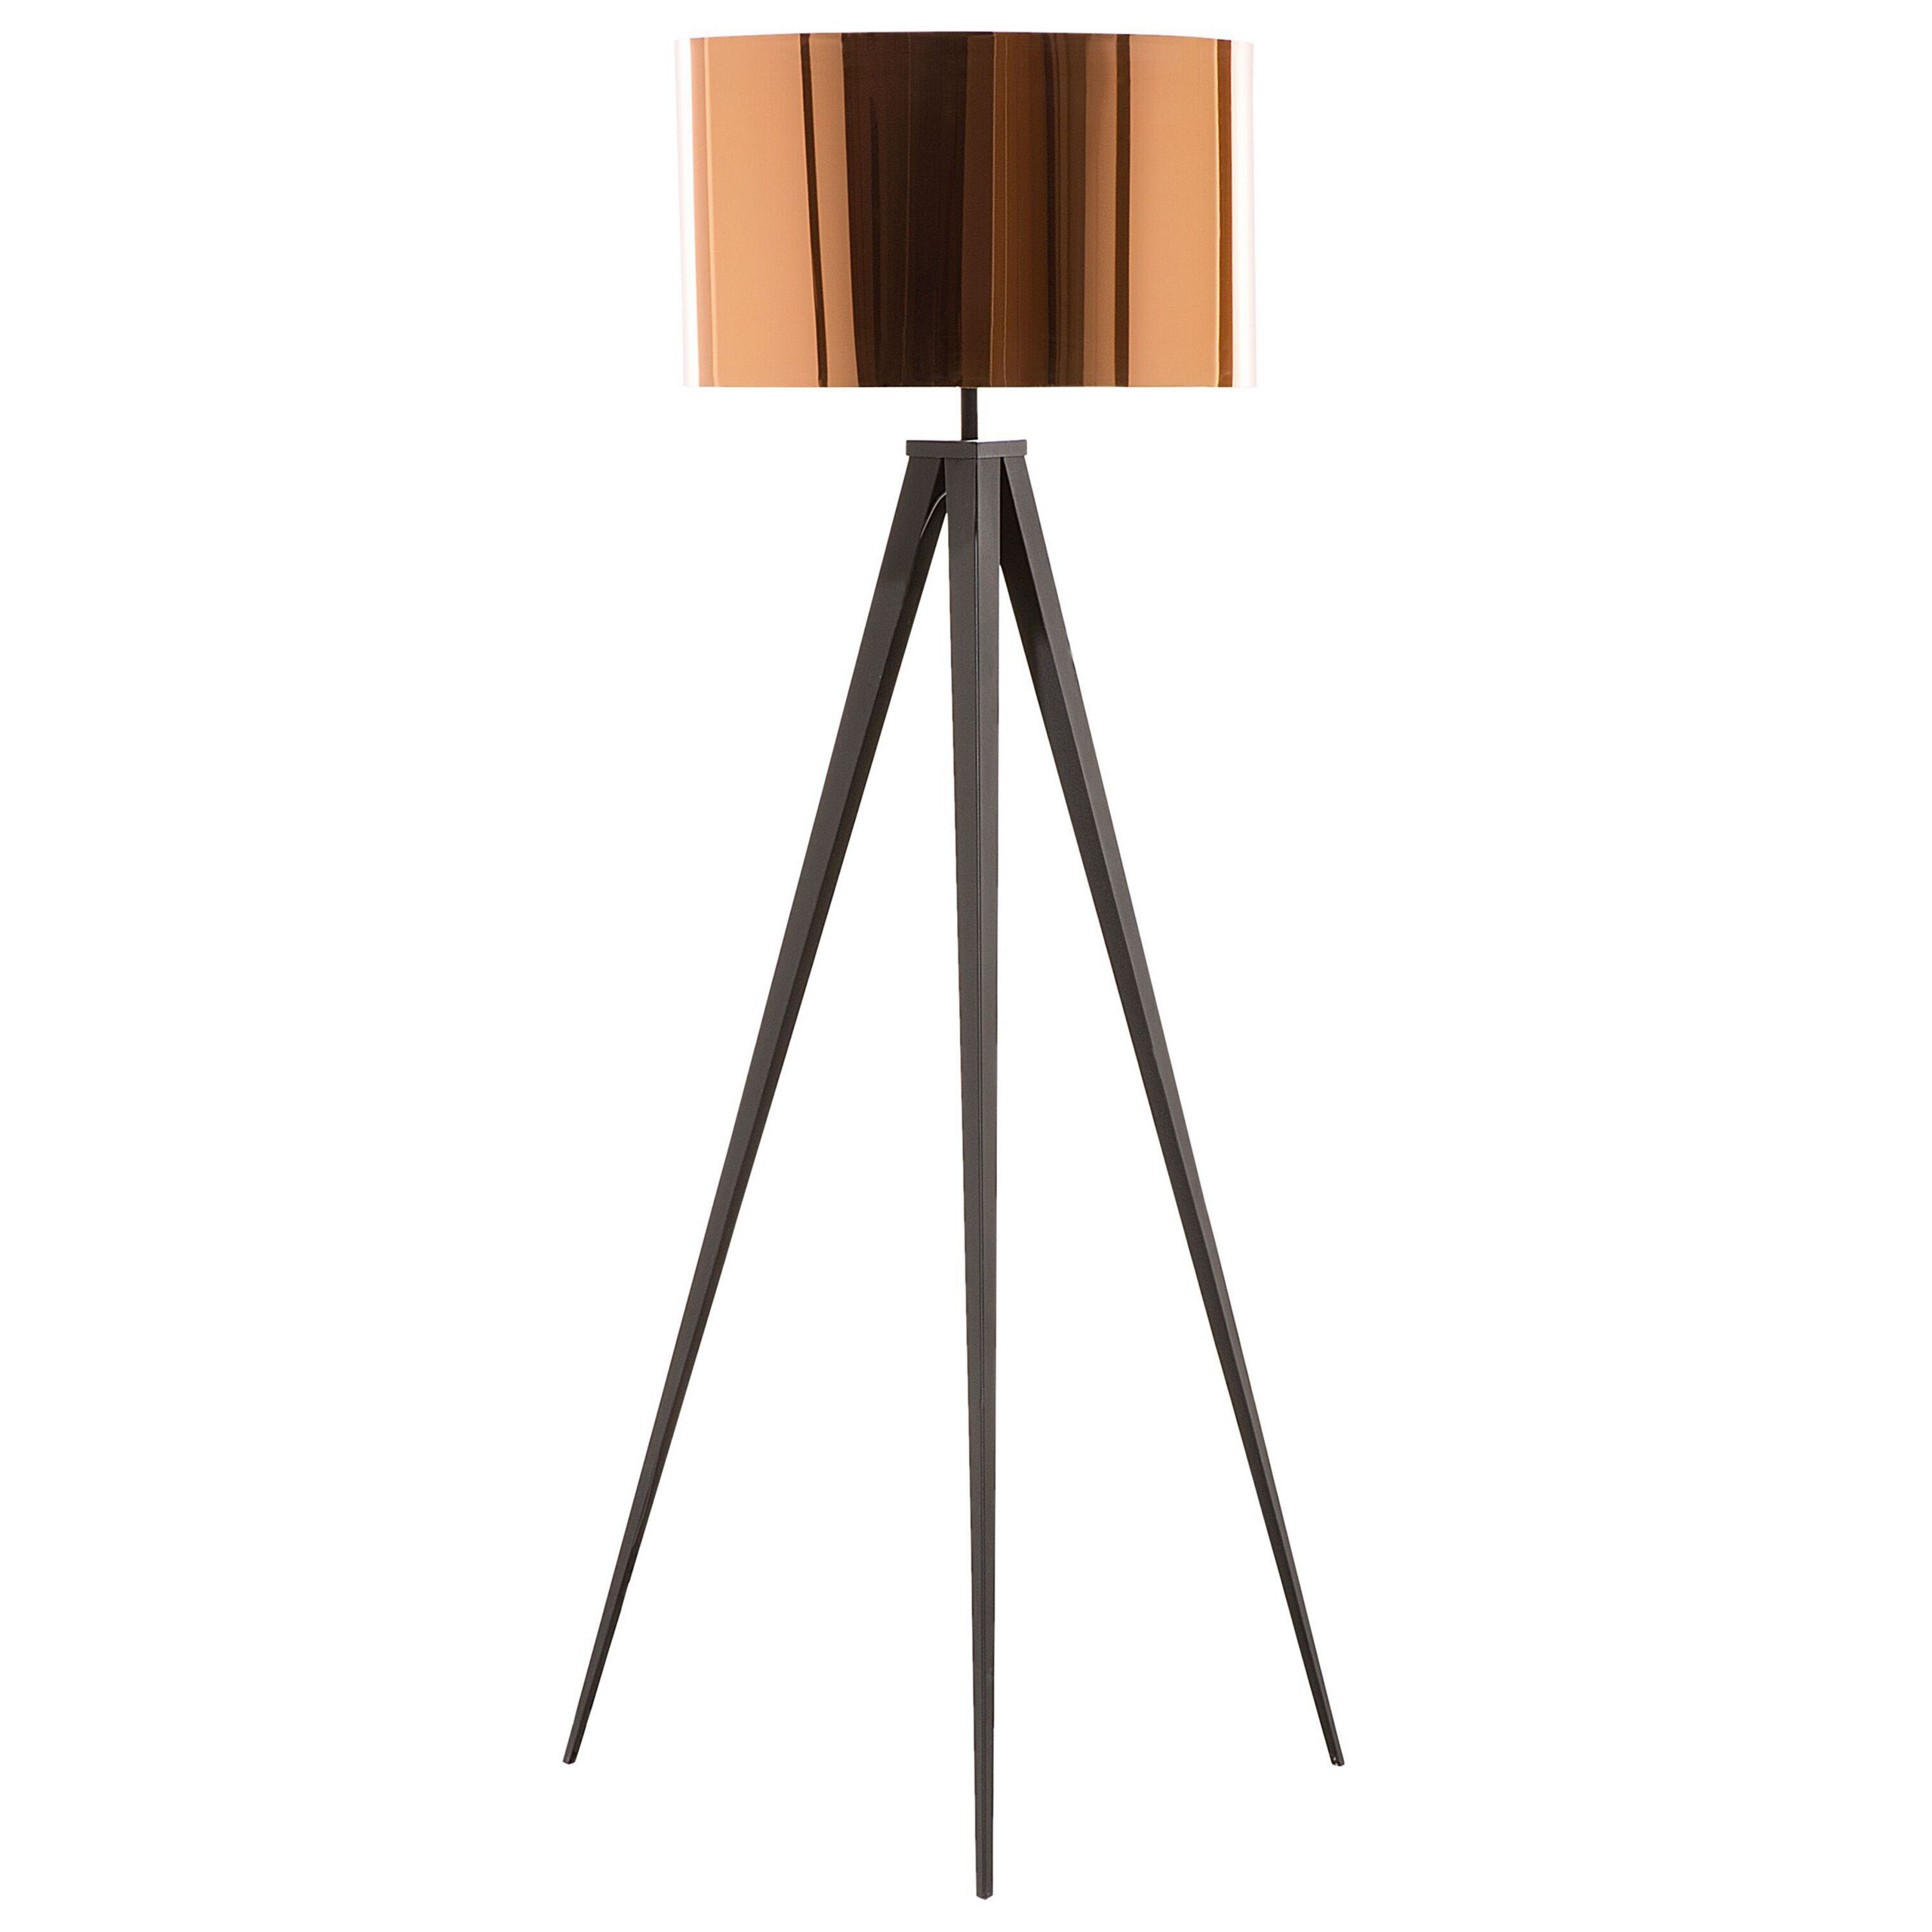 Beliani Floor Lamp Copper PVC 156H cm Black Metal Tripod Legs Drum Shade Modern